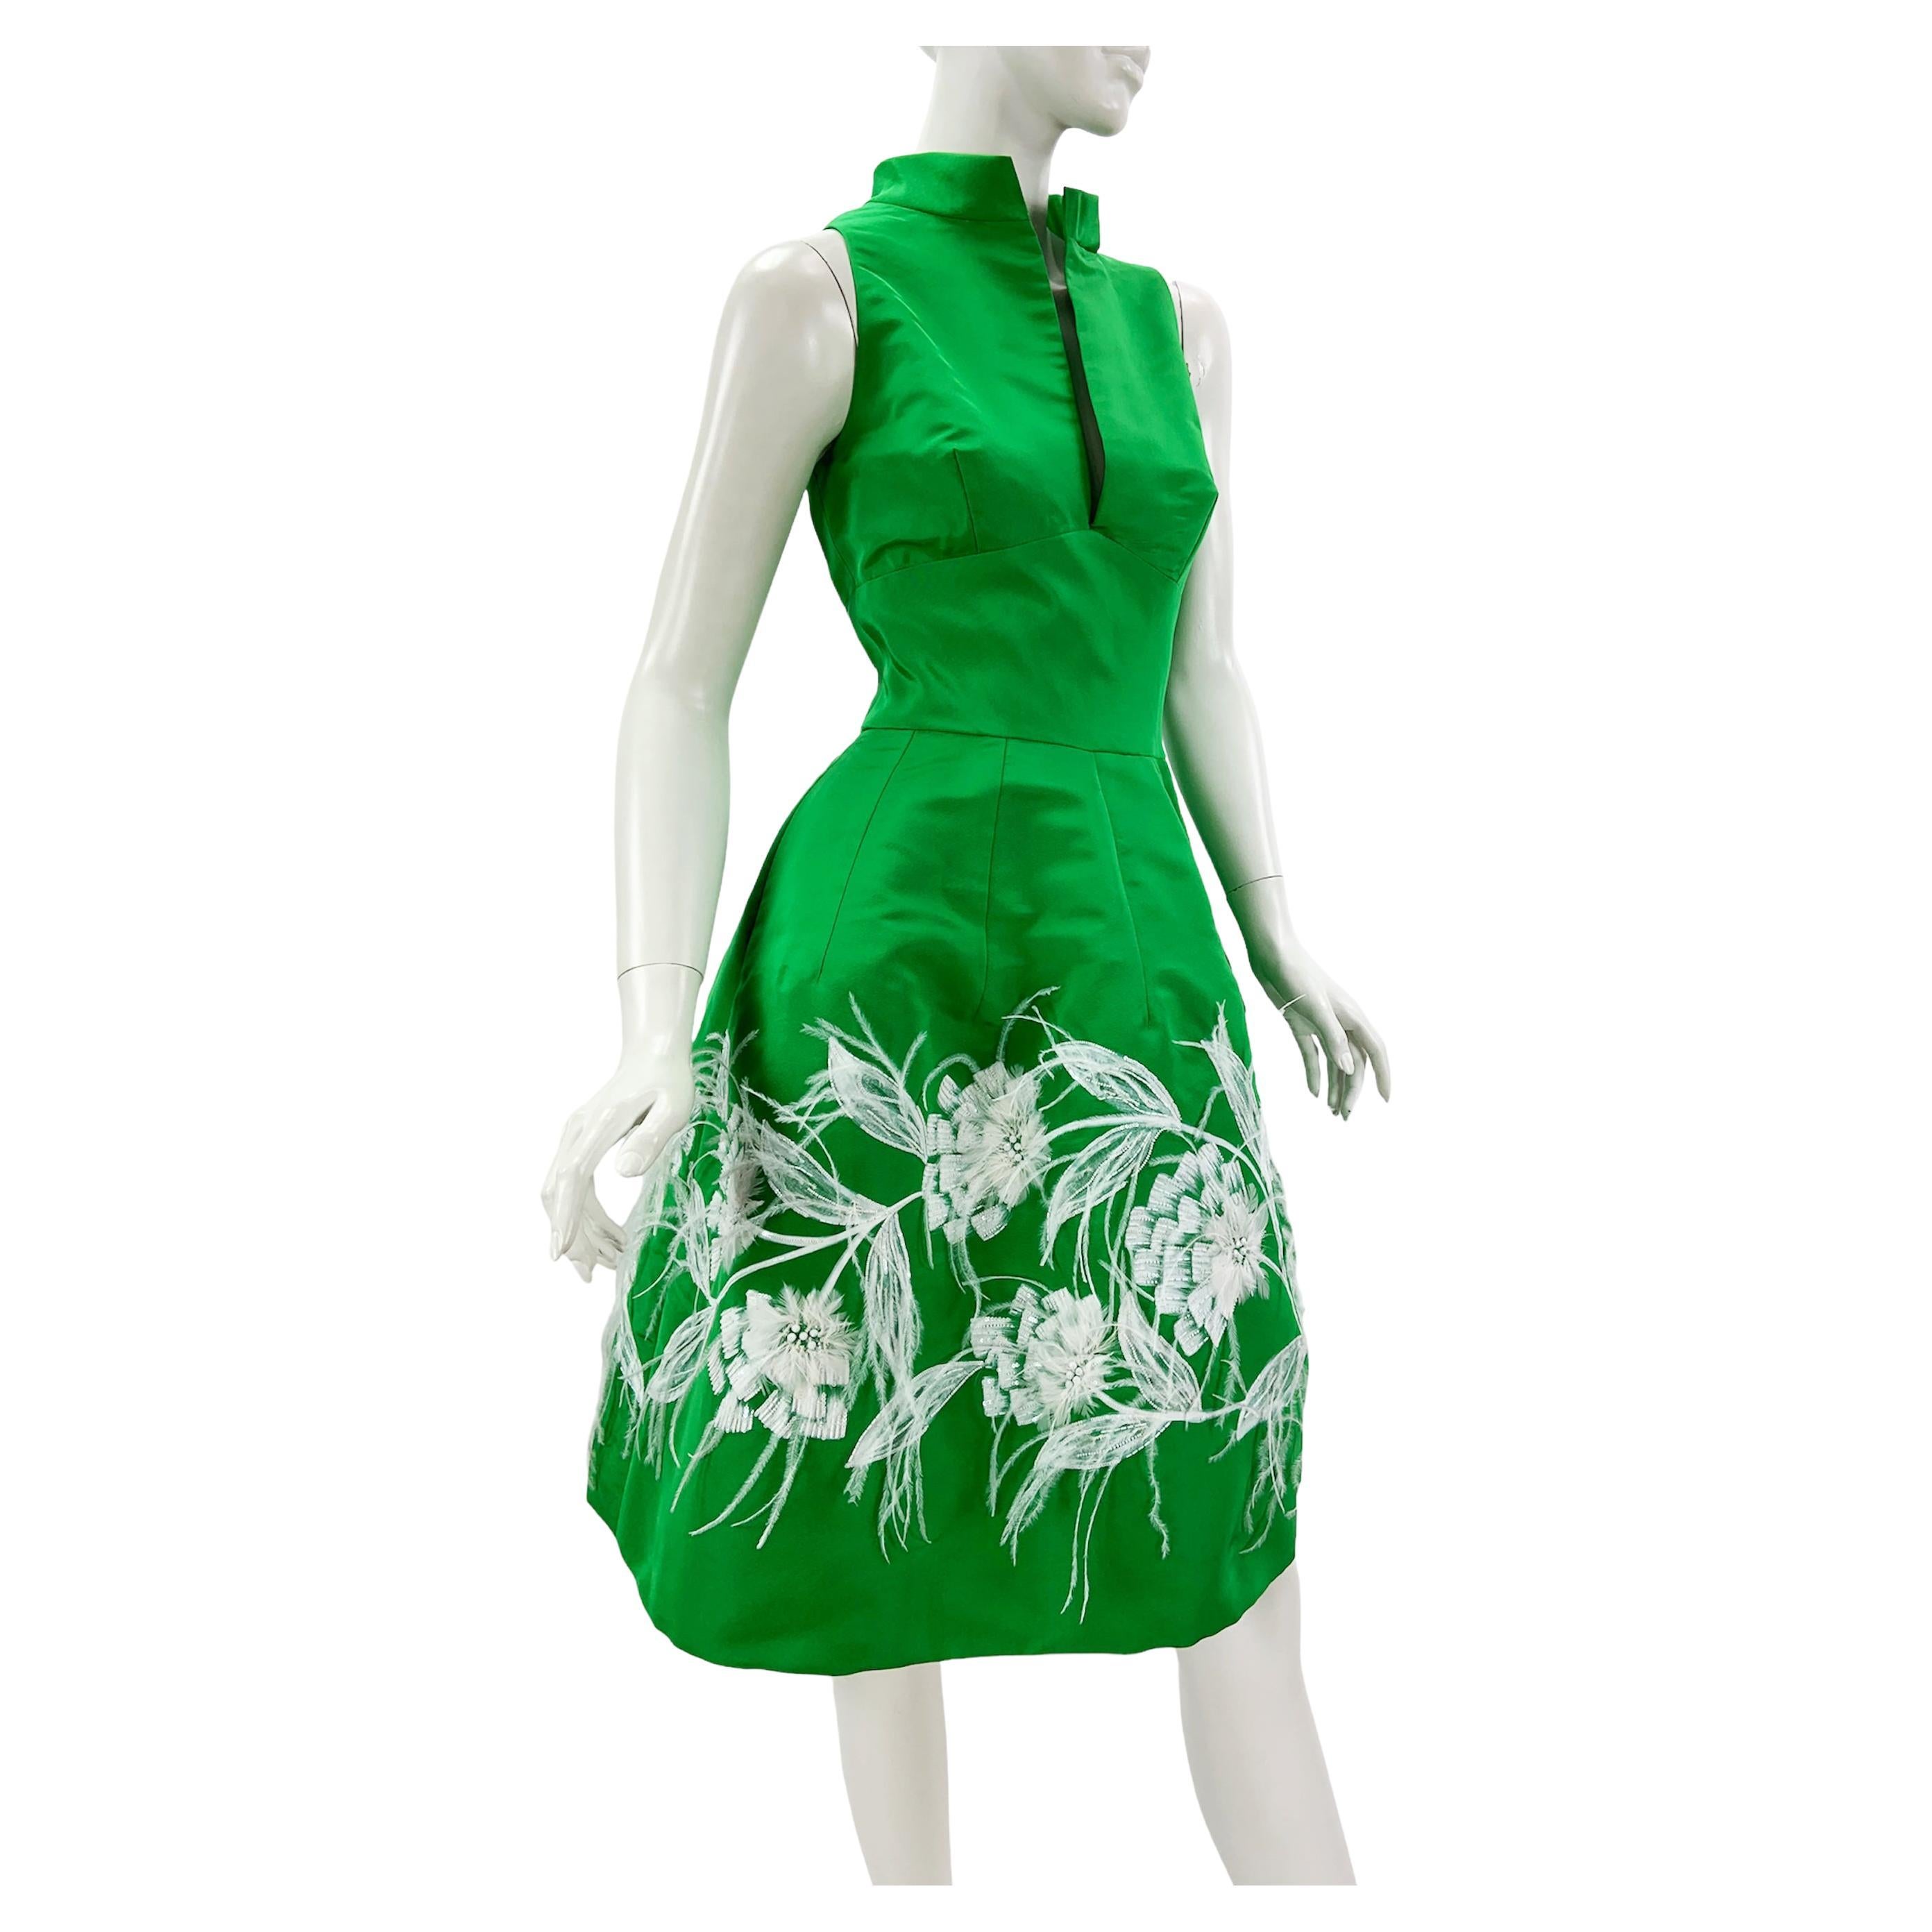 NWT Oscar de la Renta $5490 S/S 2015 Green Silk Taffeta Feather Beads Dress US 6 en vente